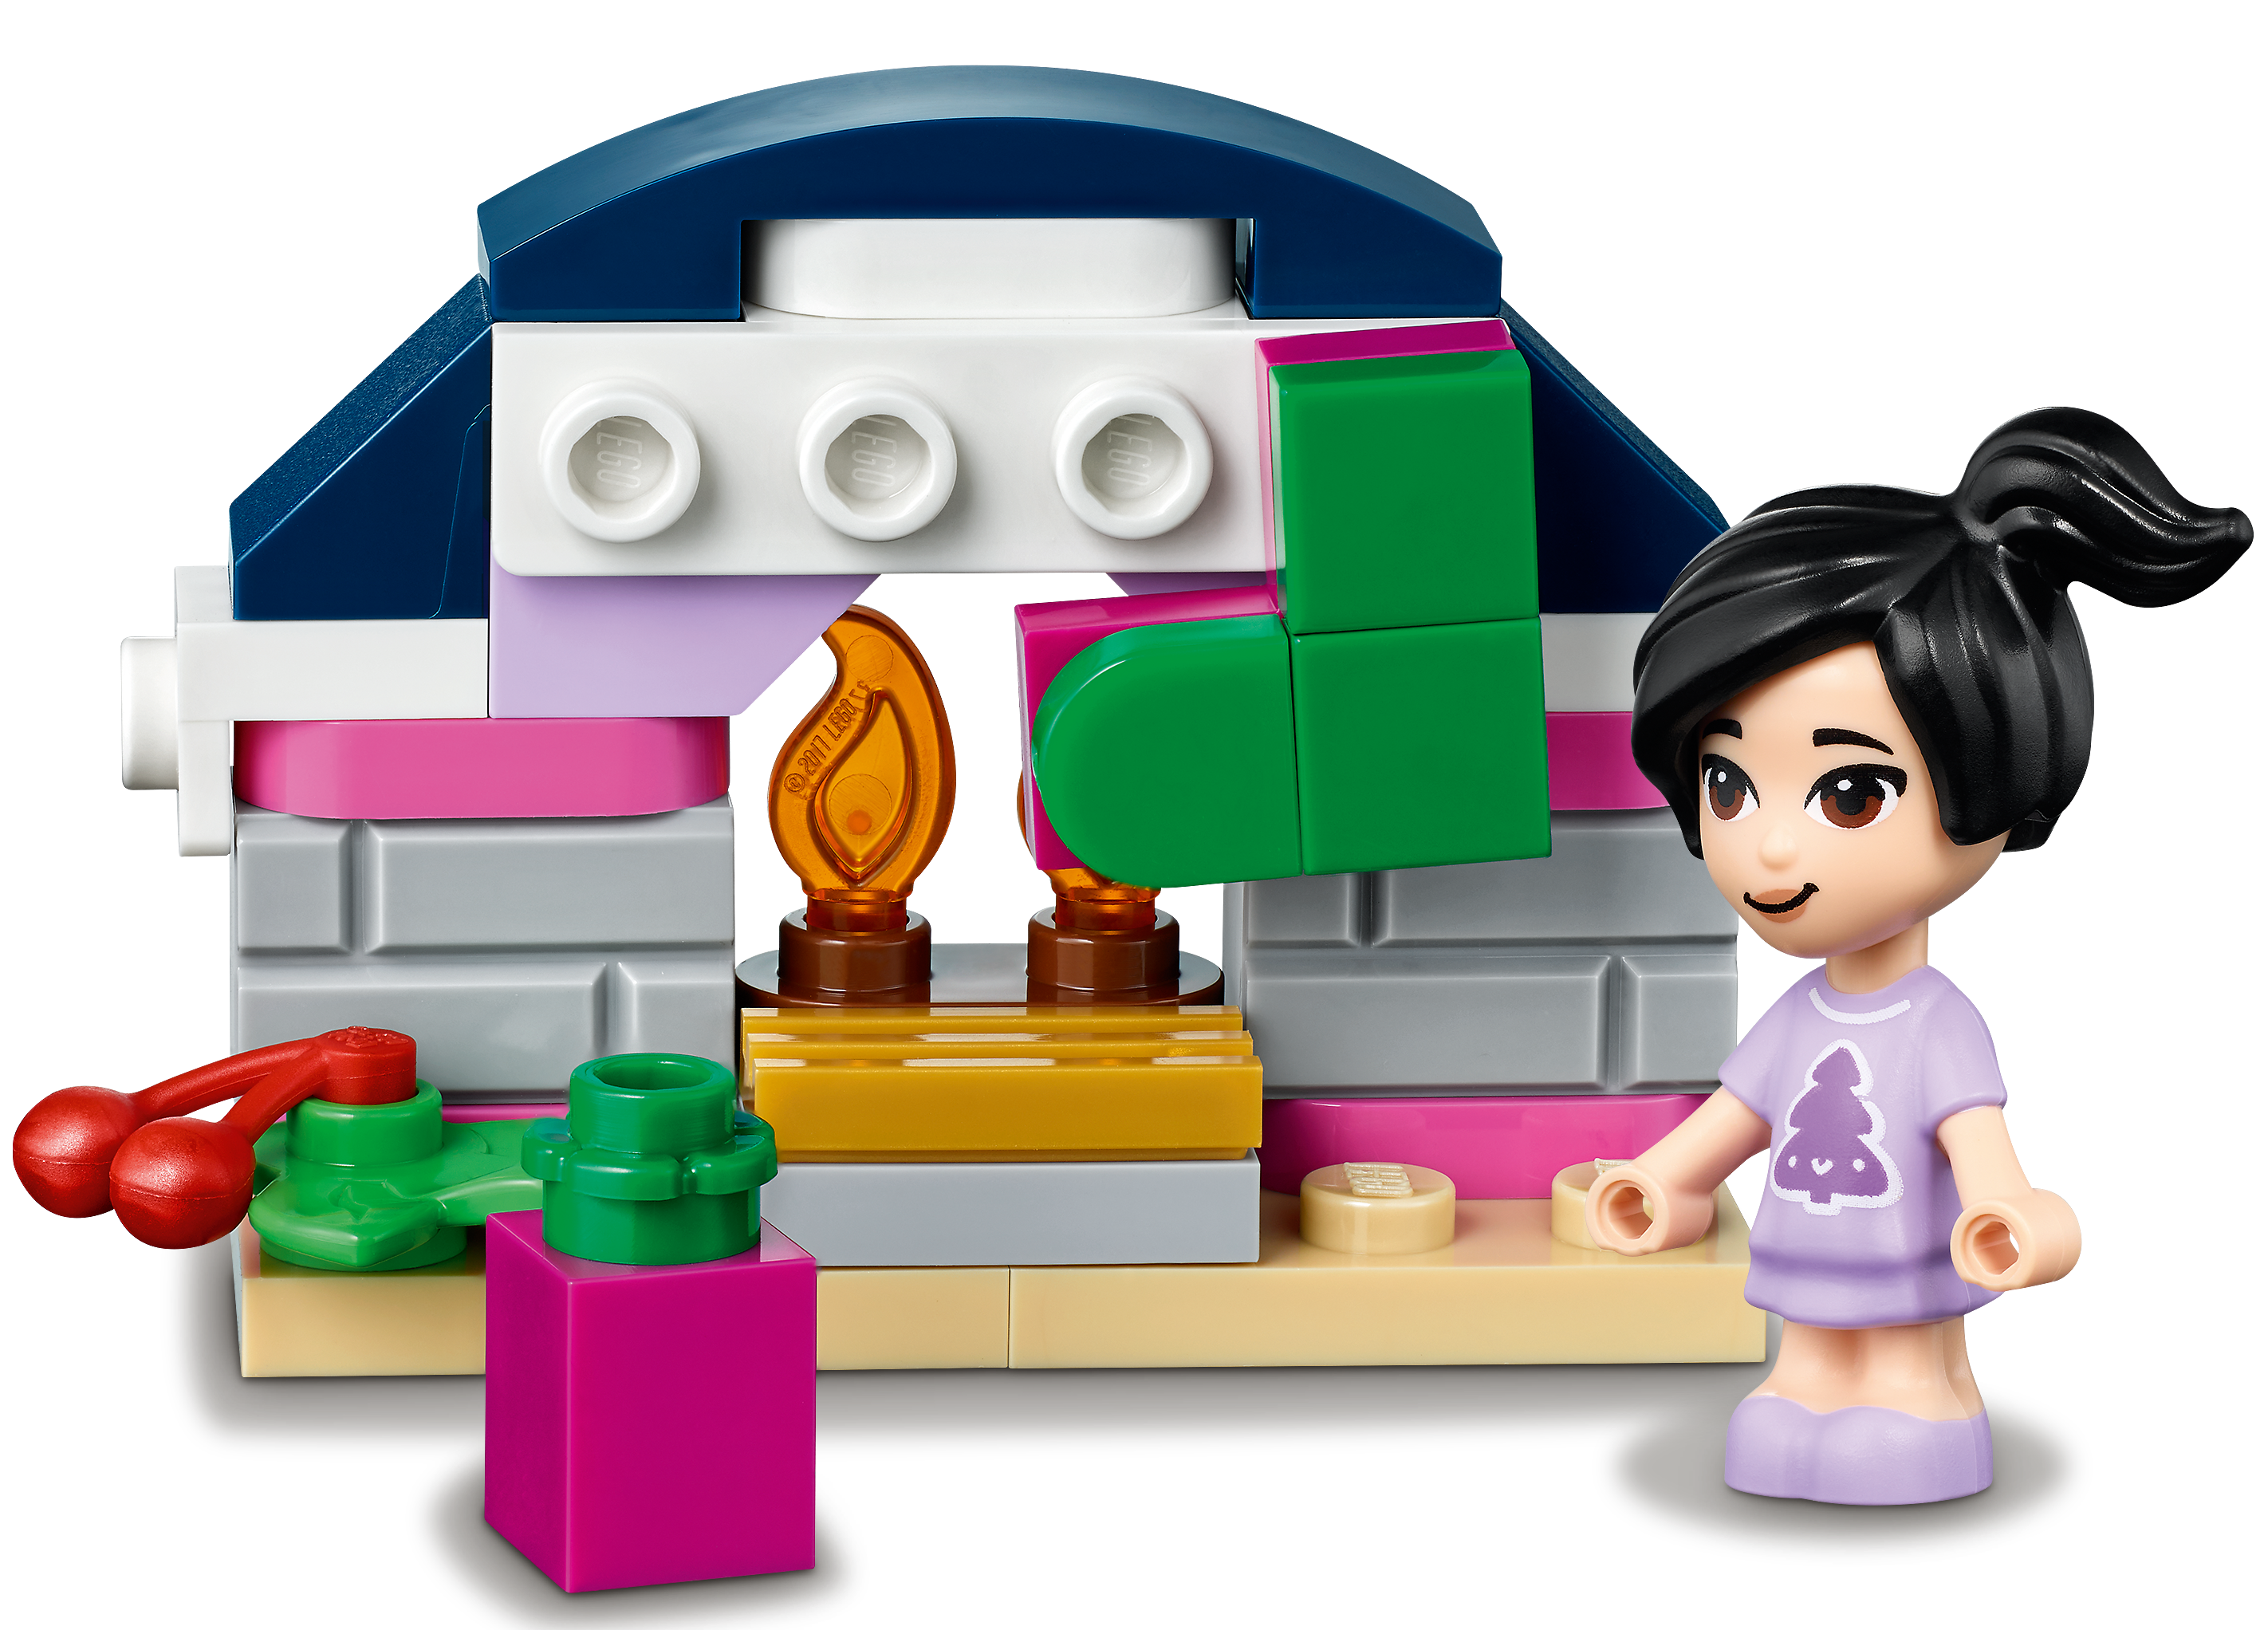 Calendrier de l'Avent Lego - Friends — La Ribouldingue